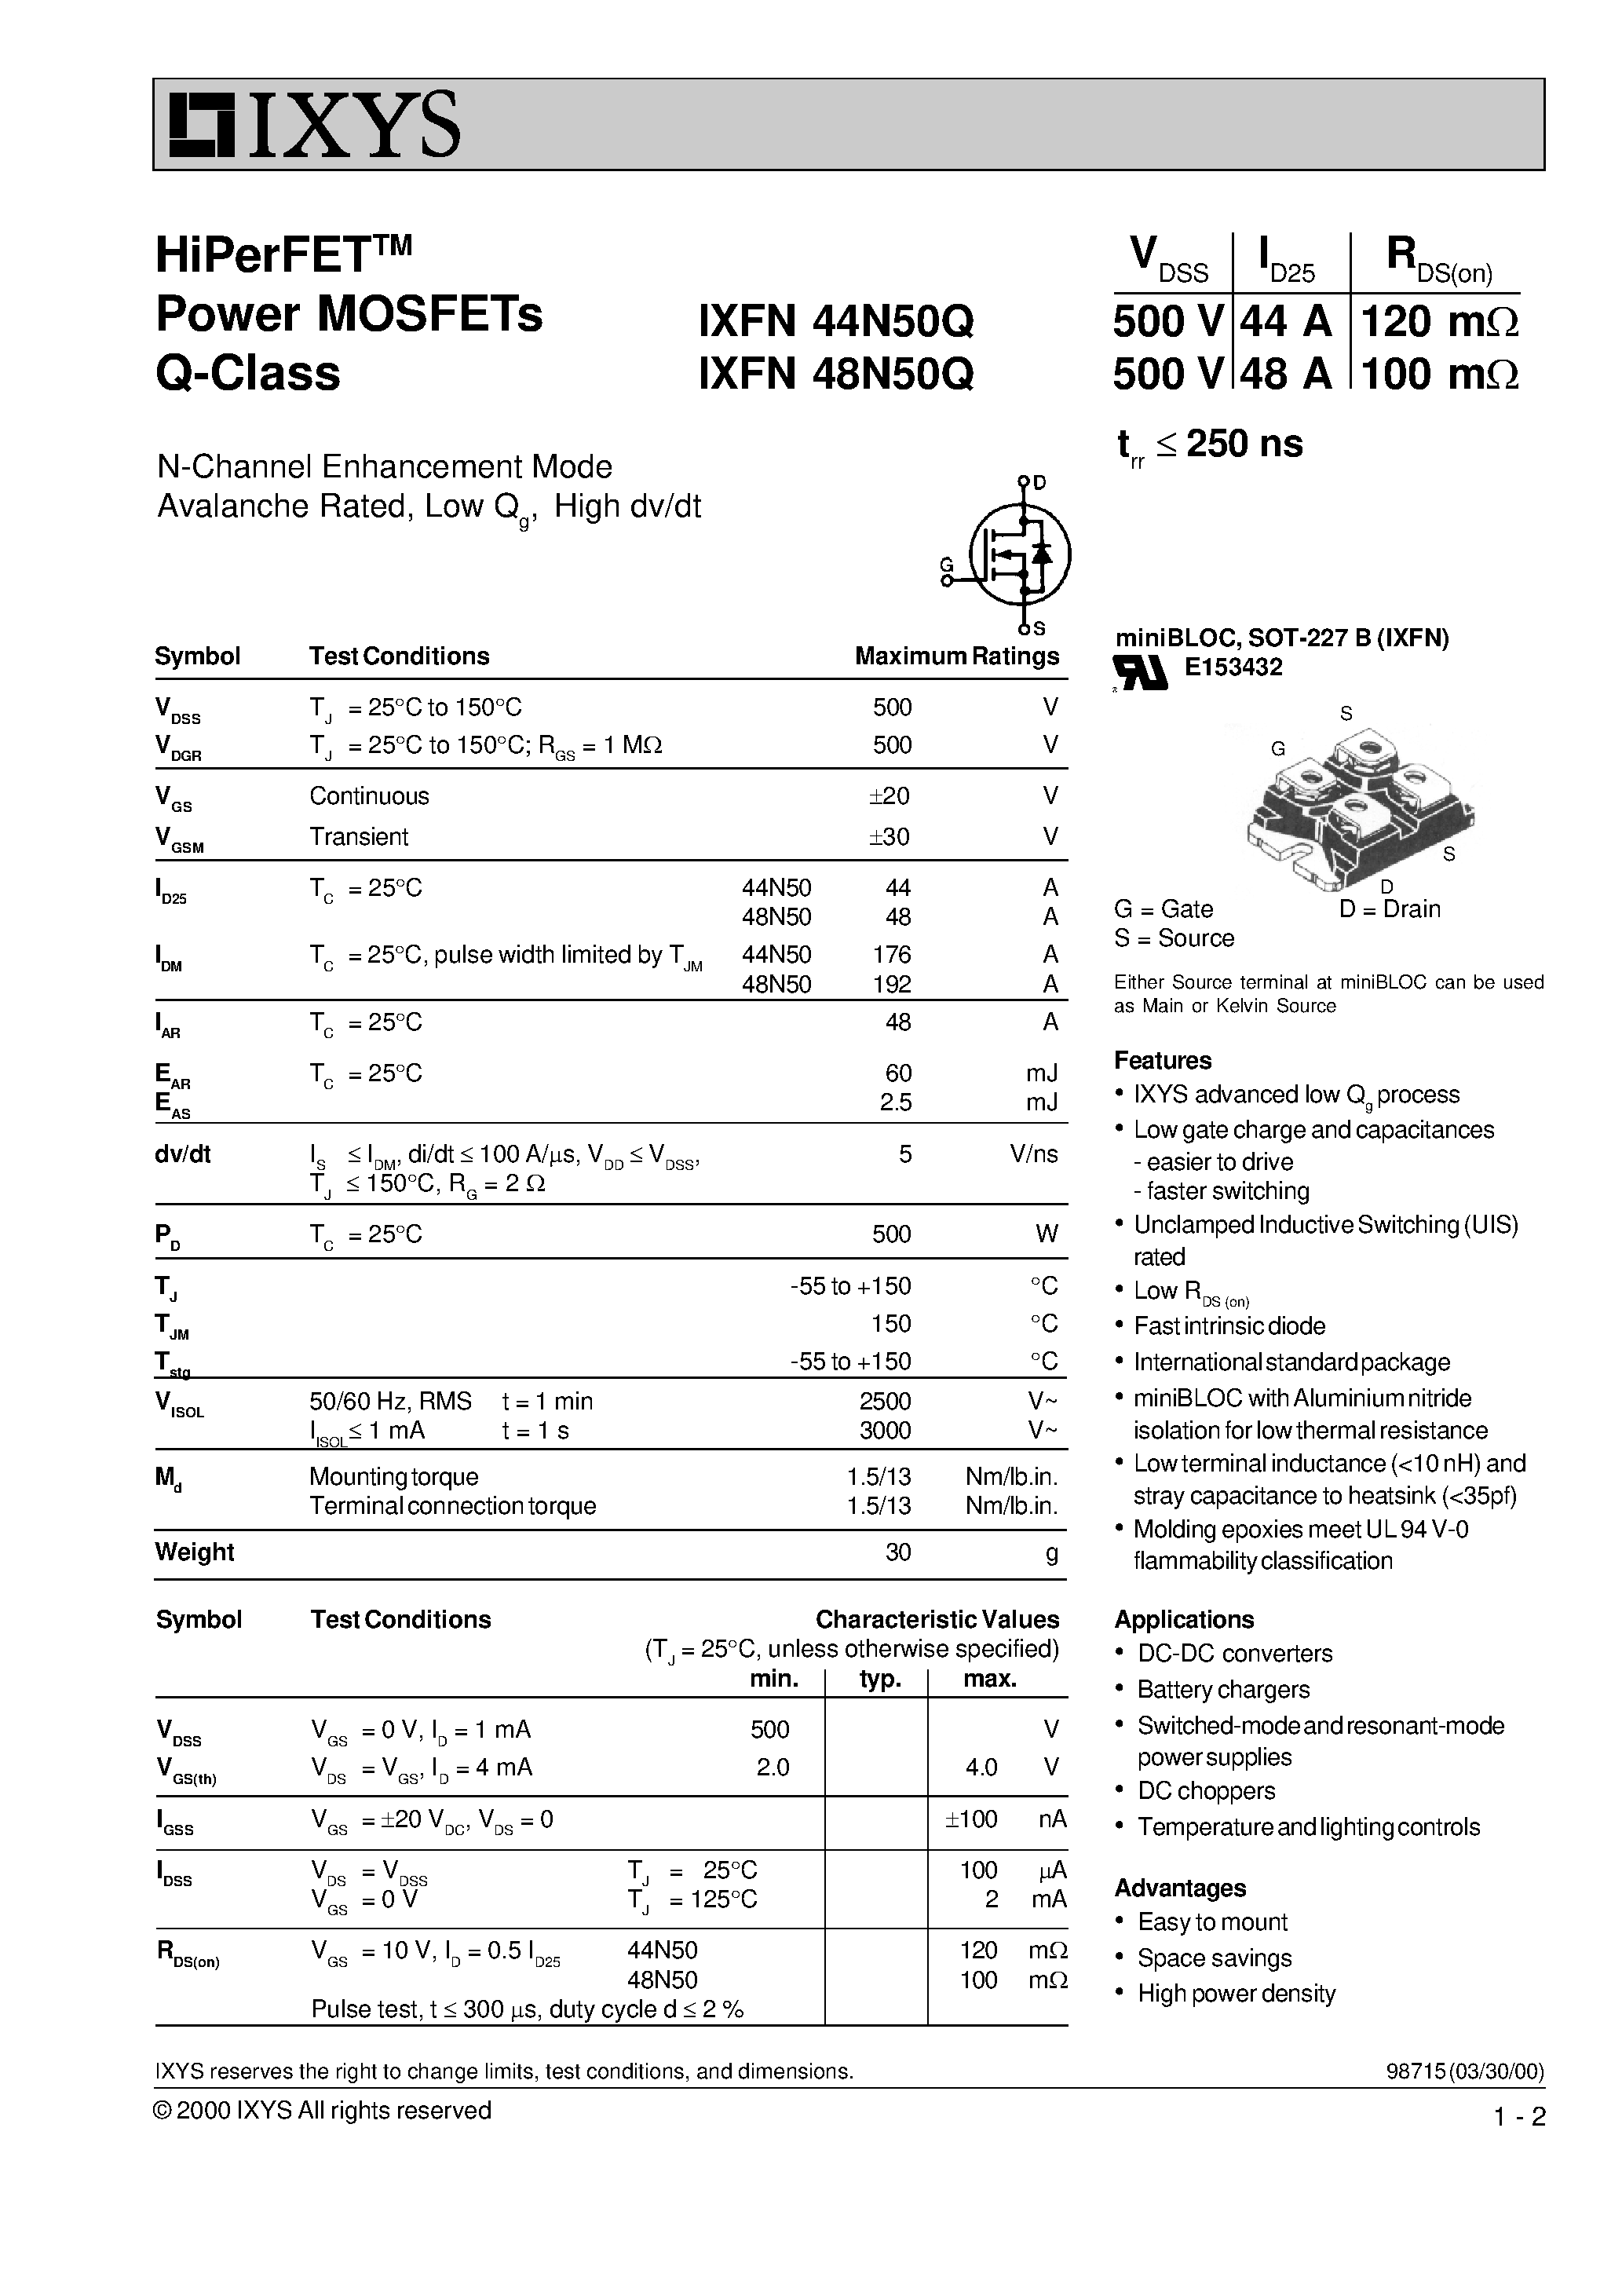 Datasheet IXFN48N50Q - HiPerFET Power MOSFETs Q-Class page 1